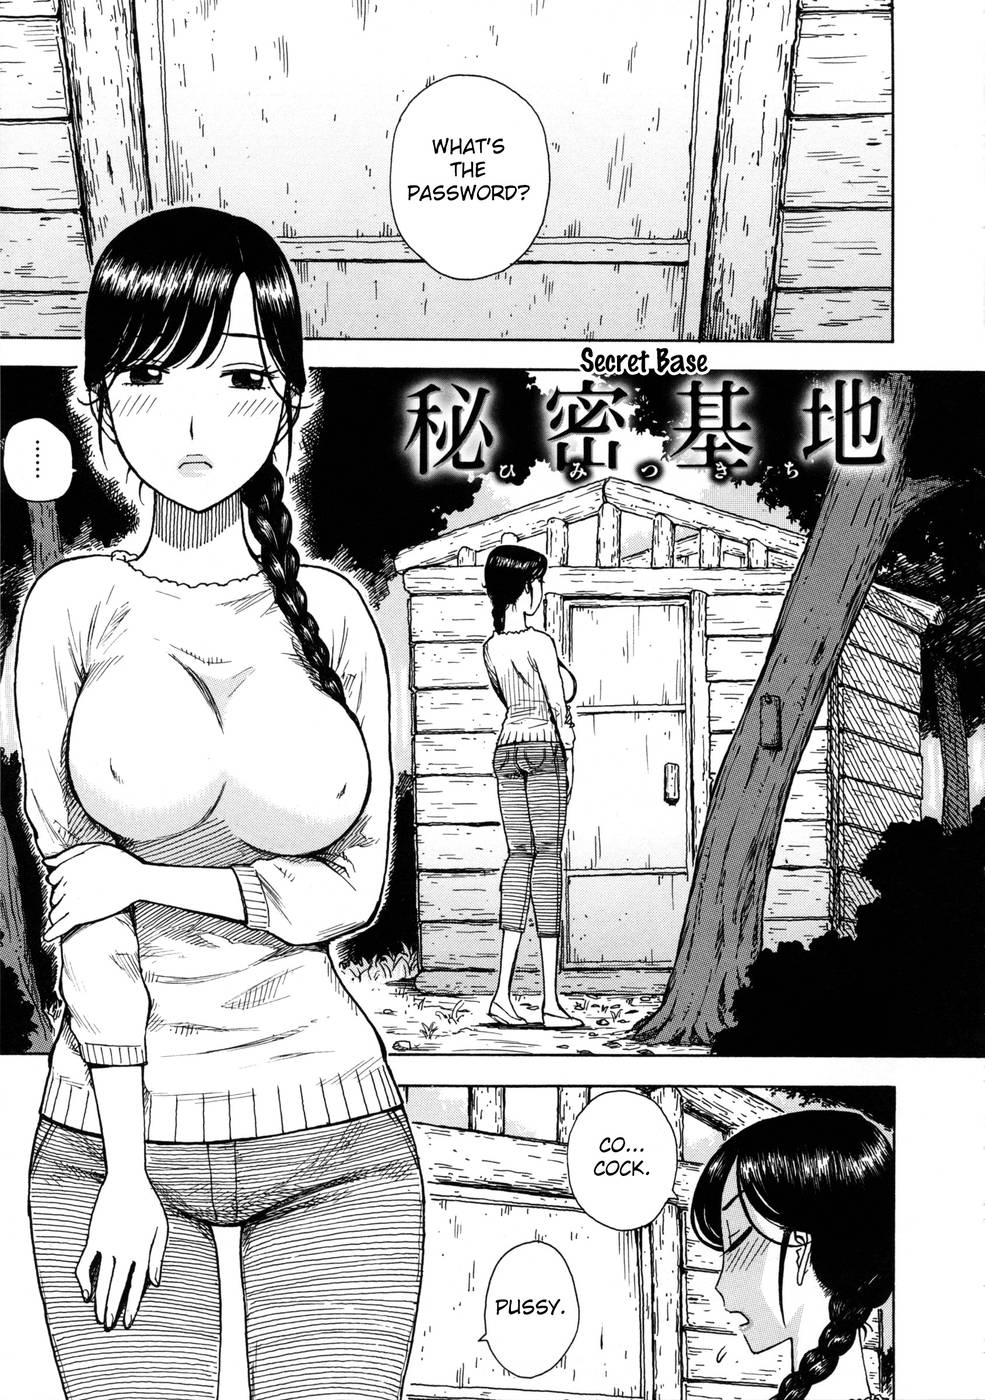 Bokep Bahasa Indonesia - Hitozuma-Chapter 11-Serect Base-Hentai Manga Hentai Comic - Online porn  video at mobile